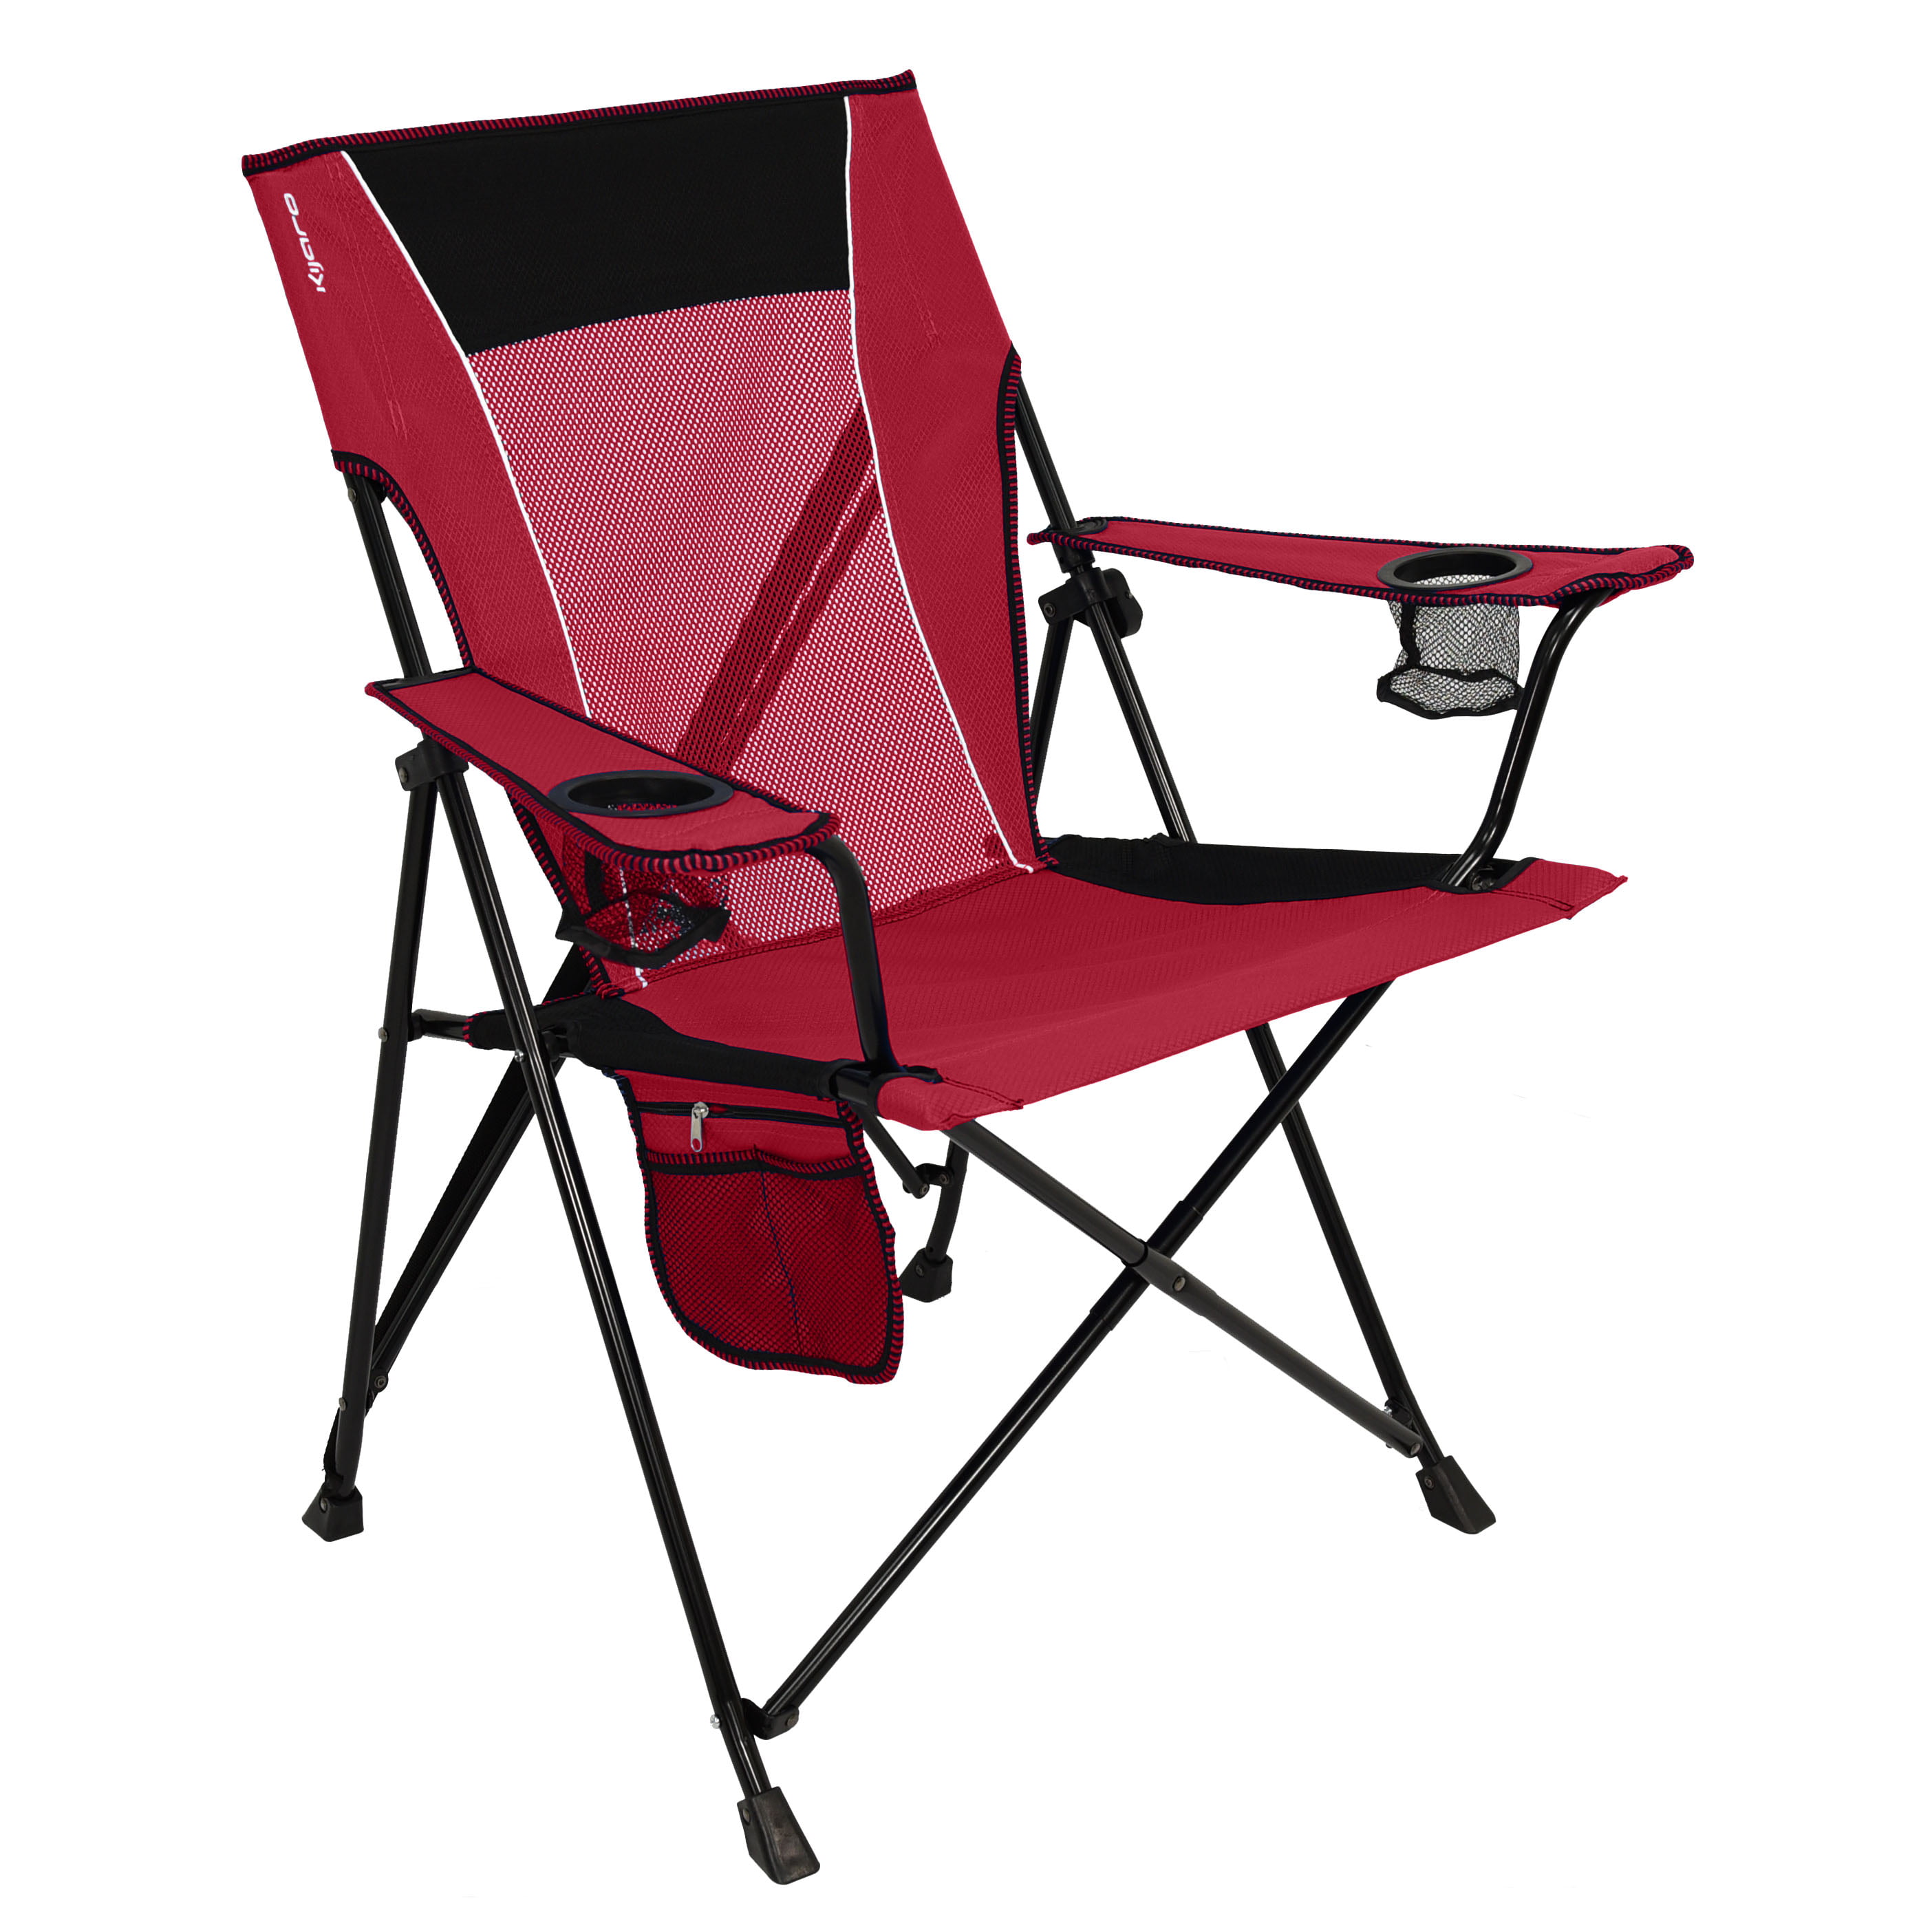 Modern Kijaro Dual Lock Beach Chair for Small Space